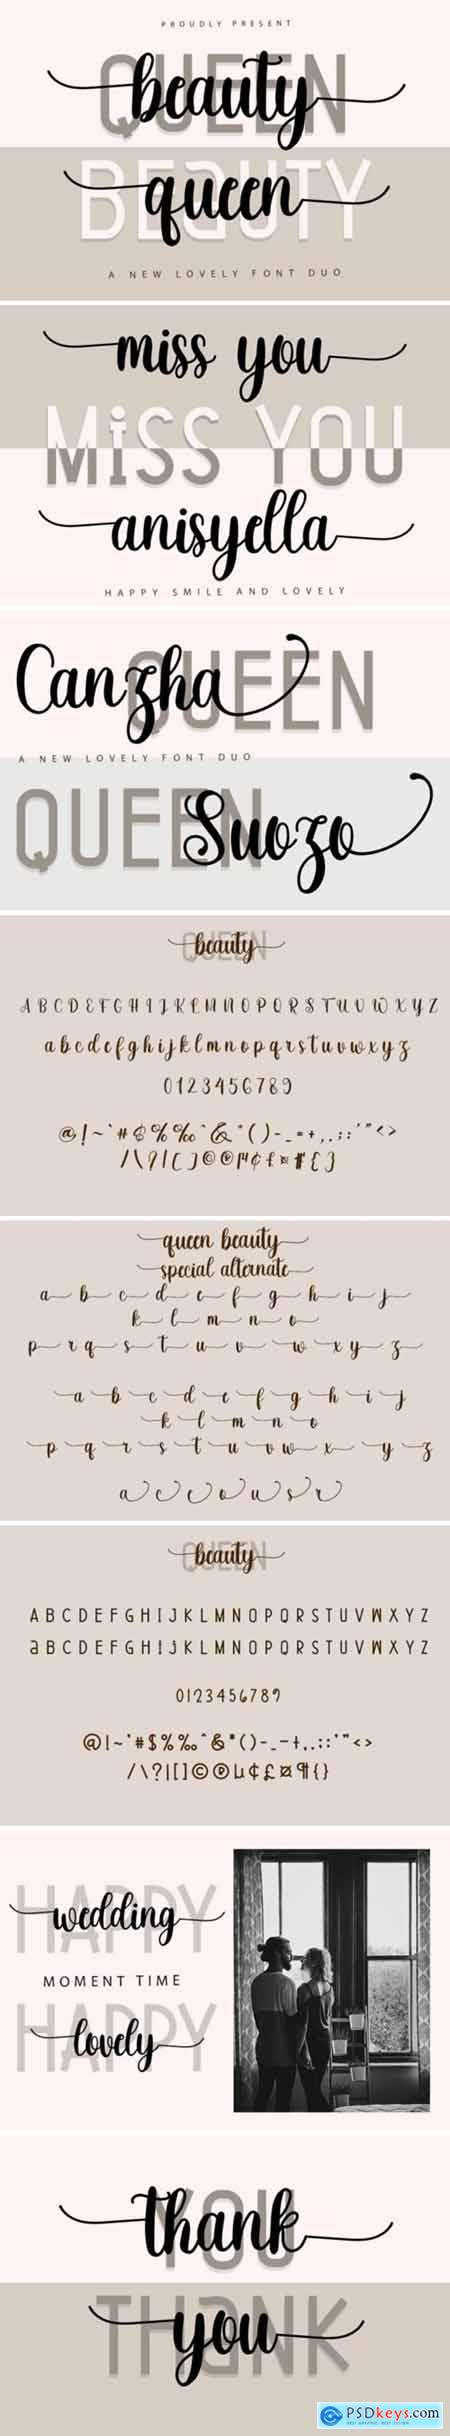 Queen Beauty Font